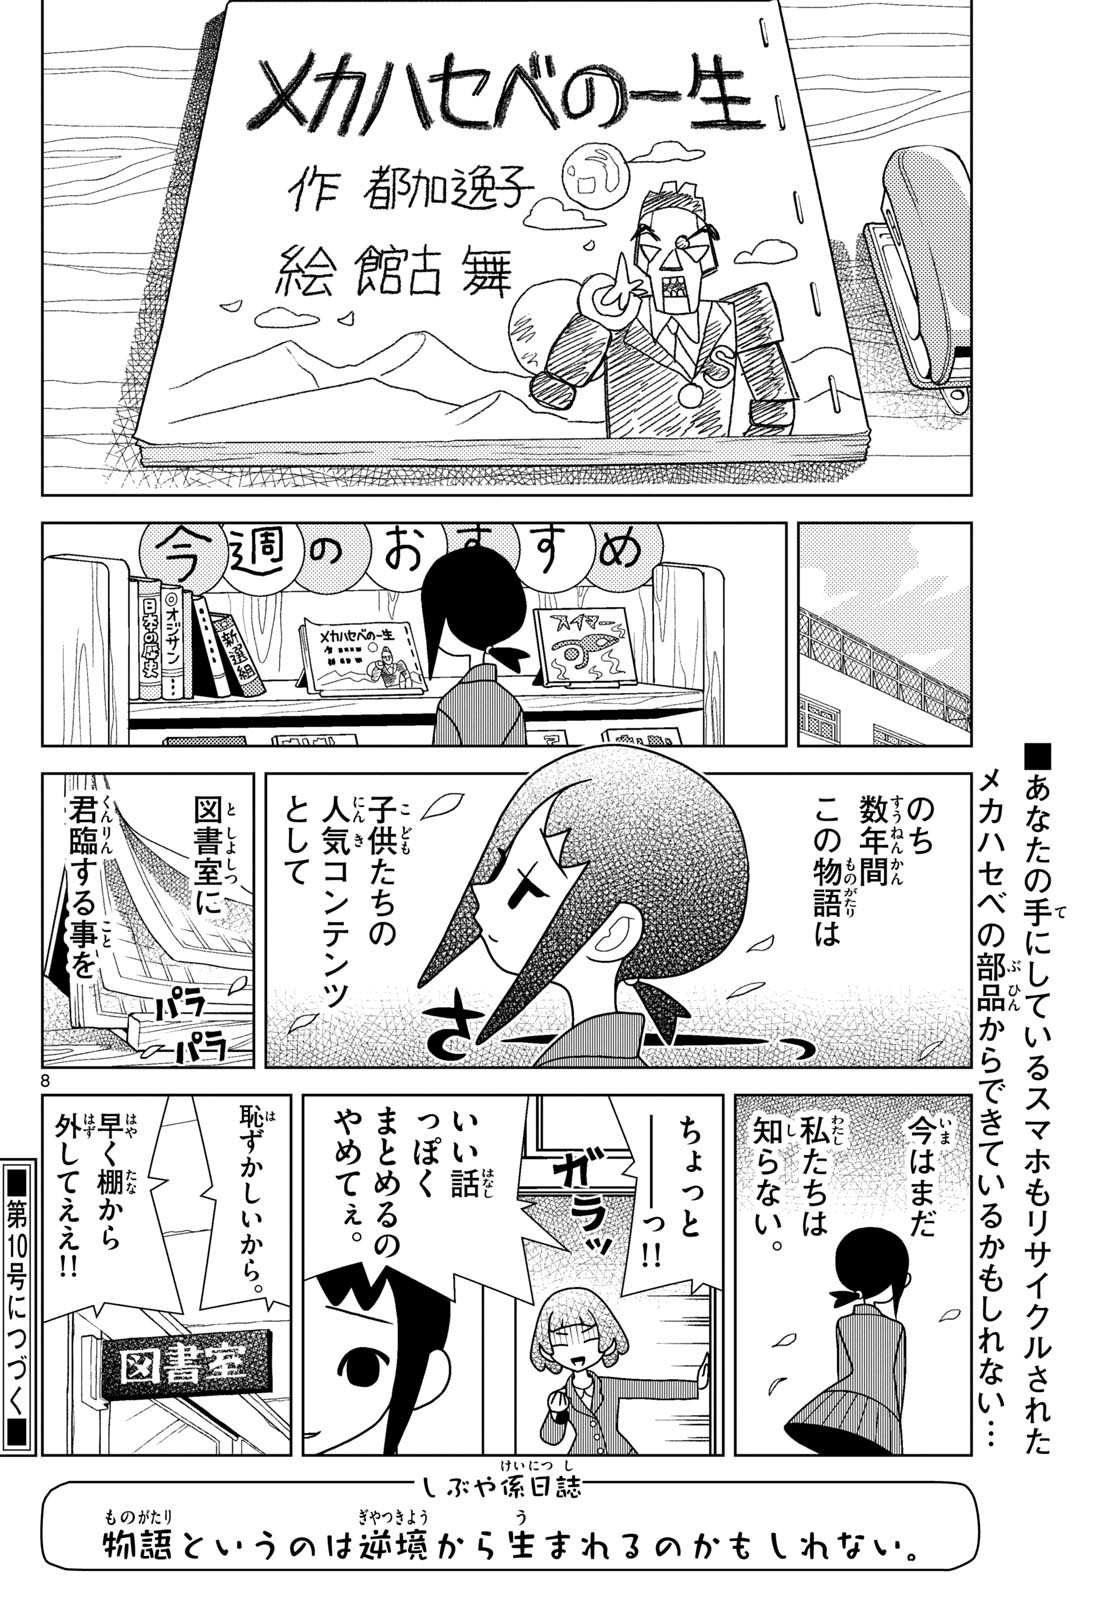 Shibuya Near Family - Chapter 084 - Page 8